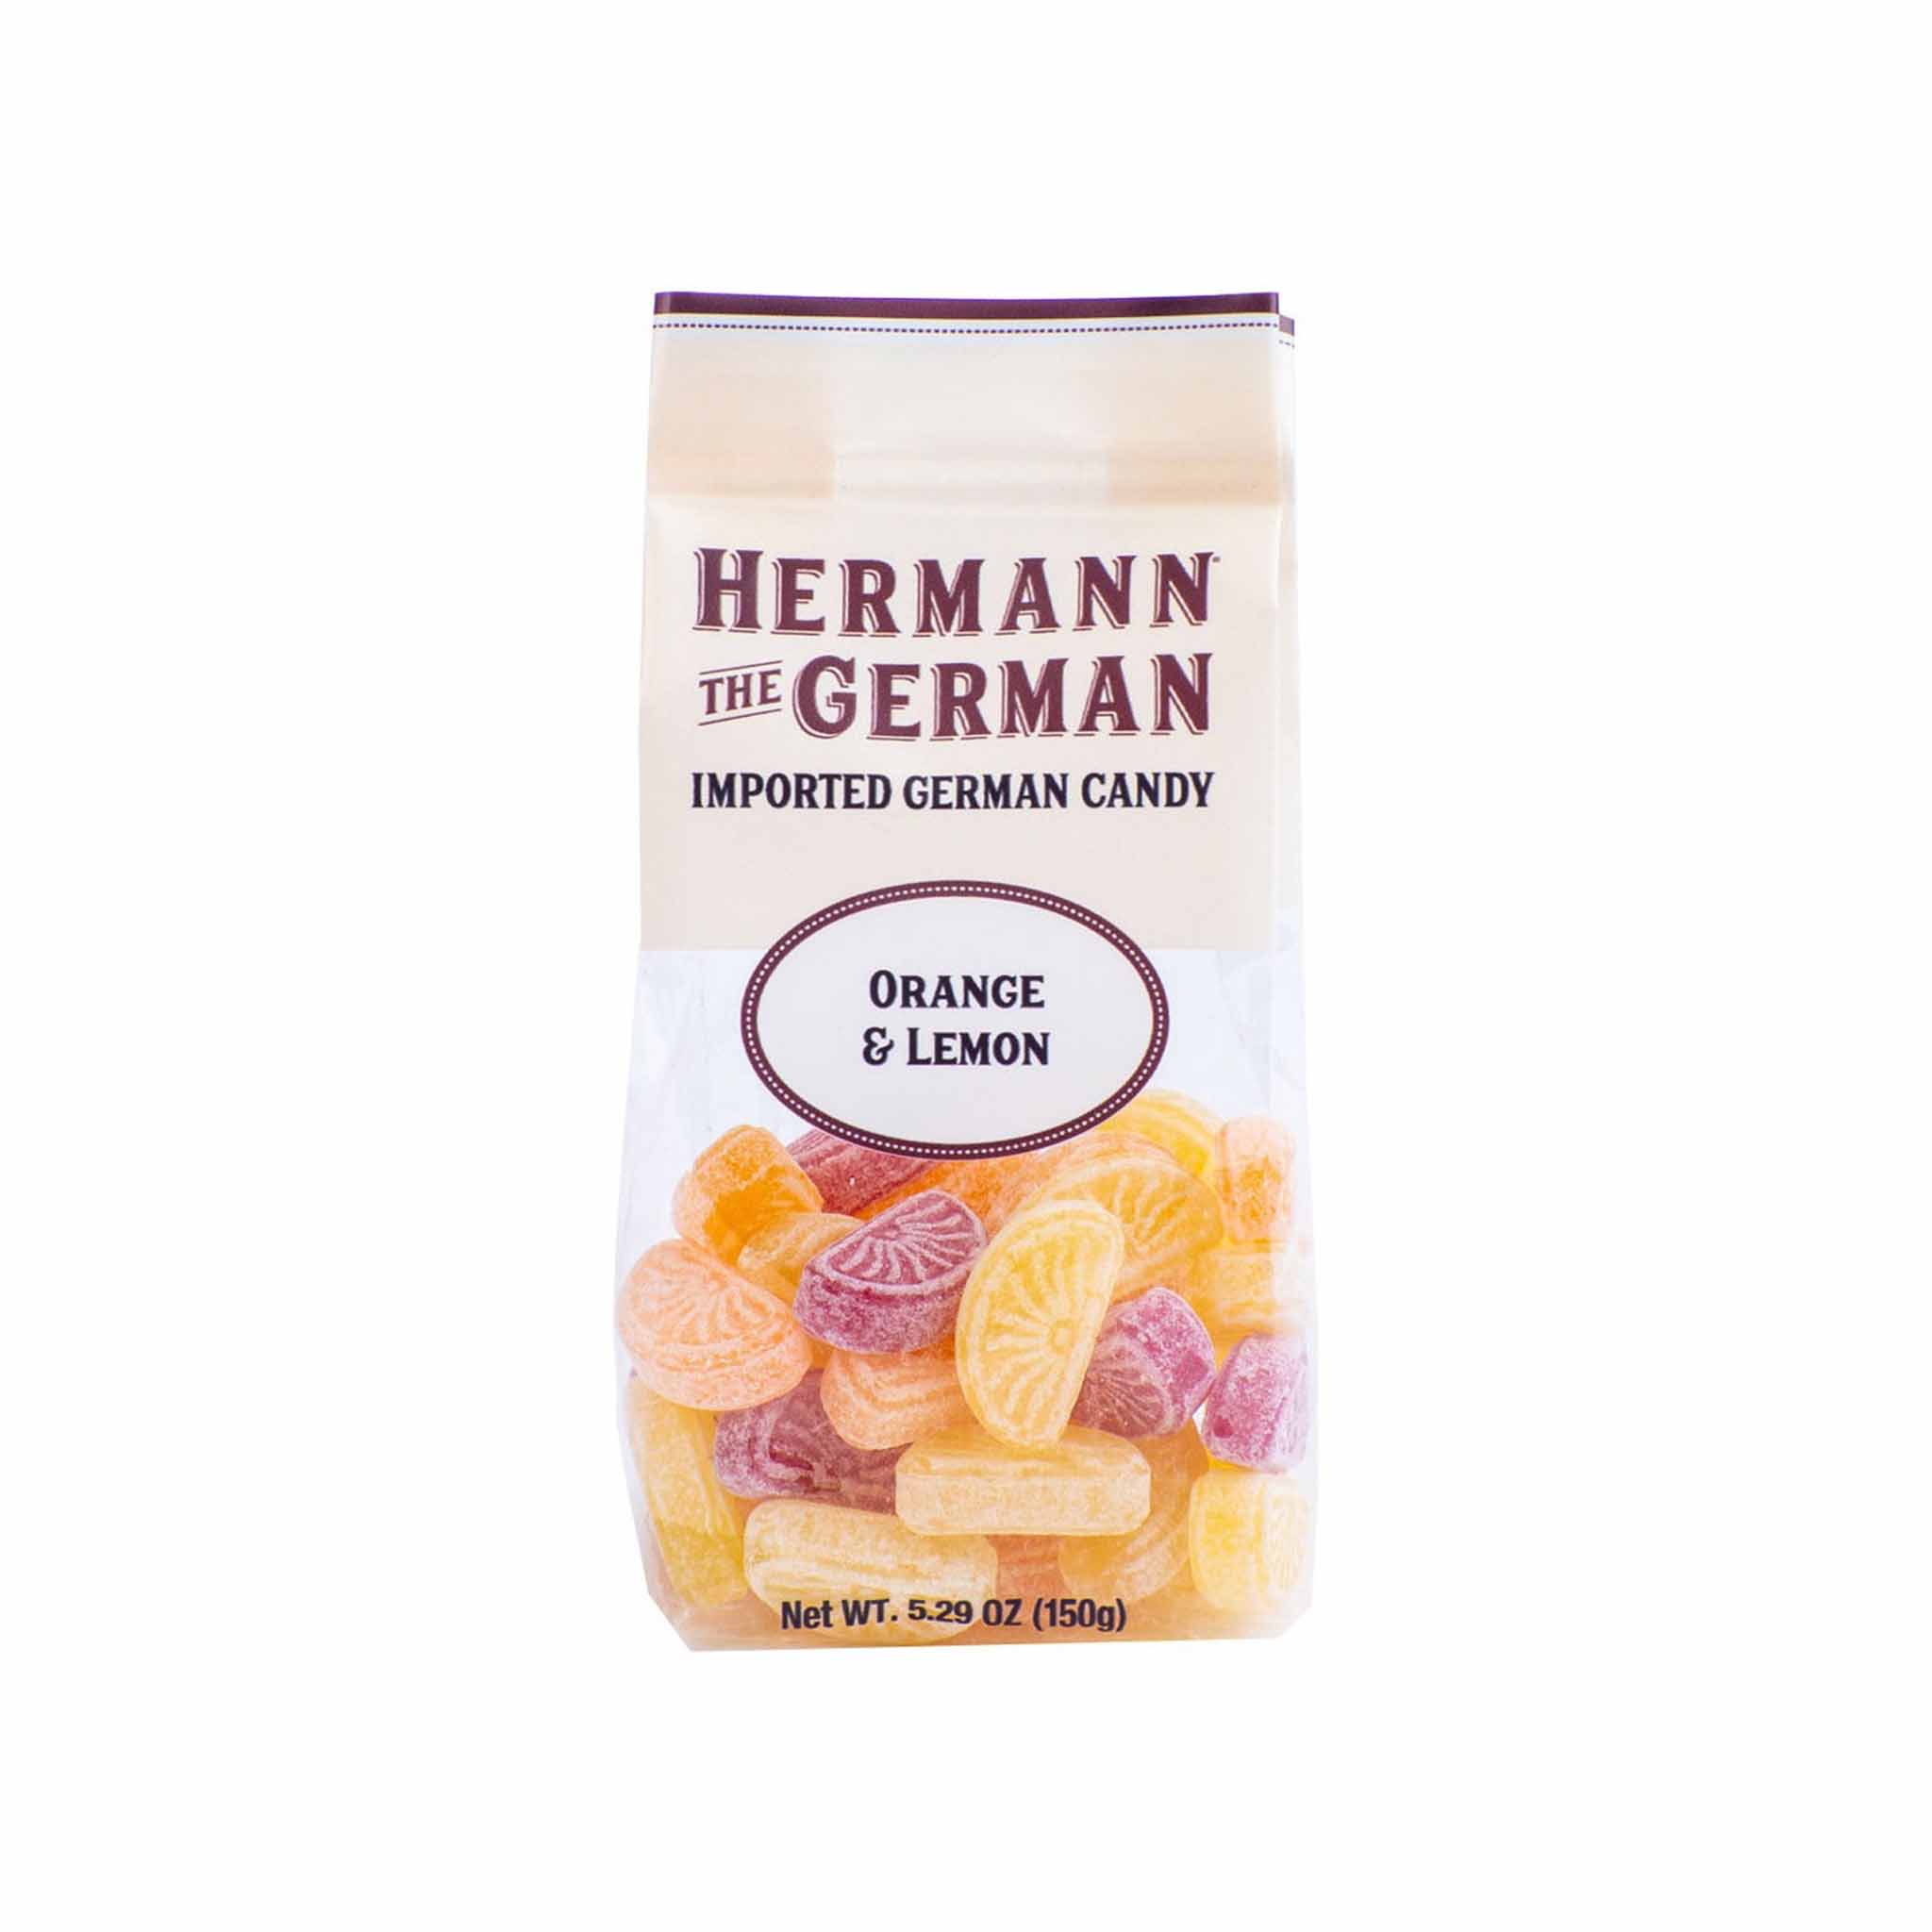 HERMANN THE GERMAN ORANGE & LEMON CANDY 150G